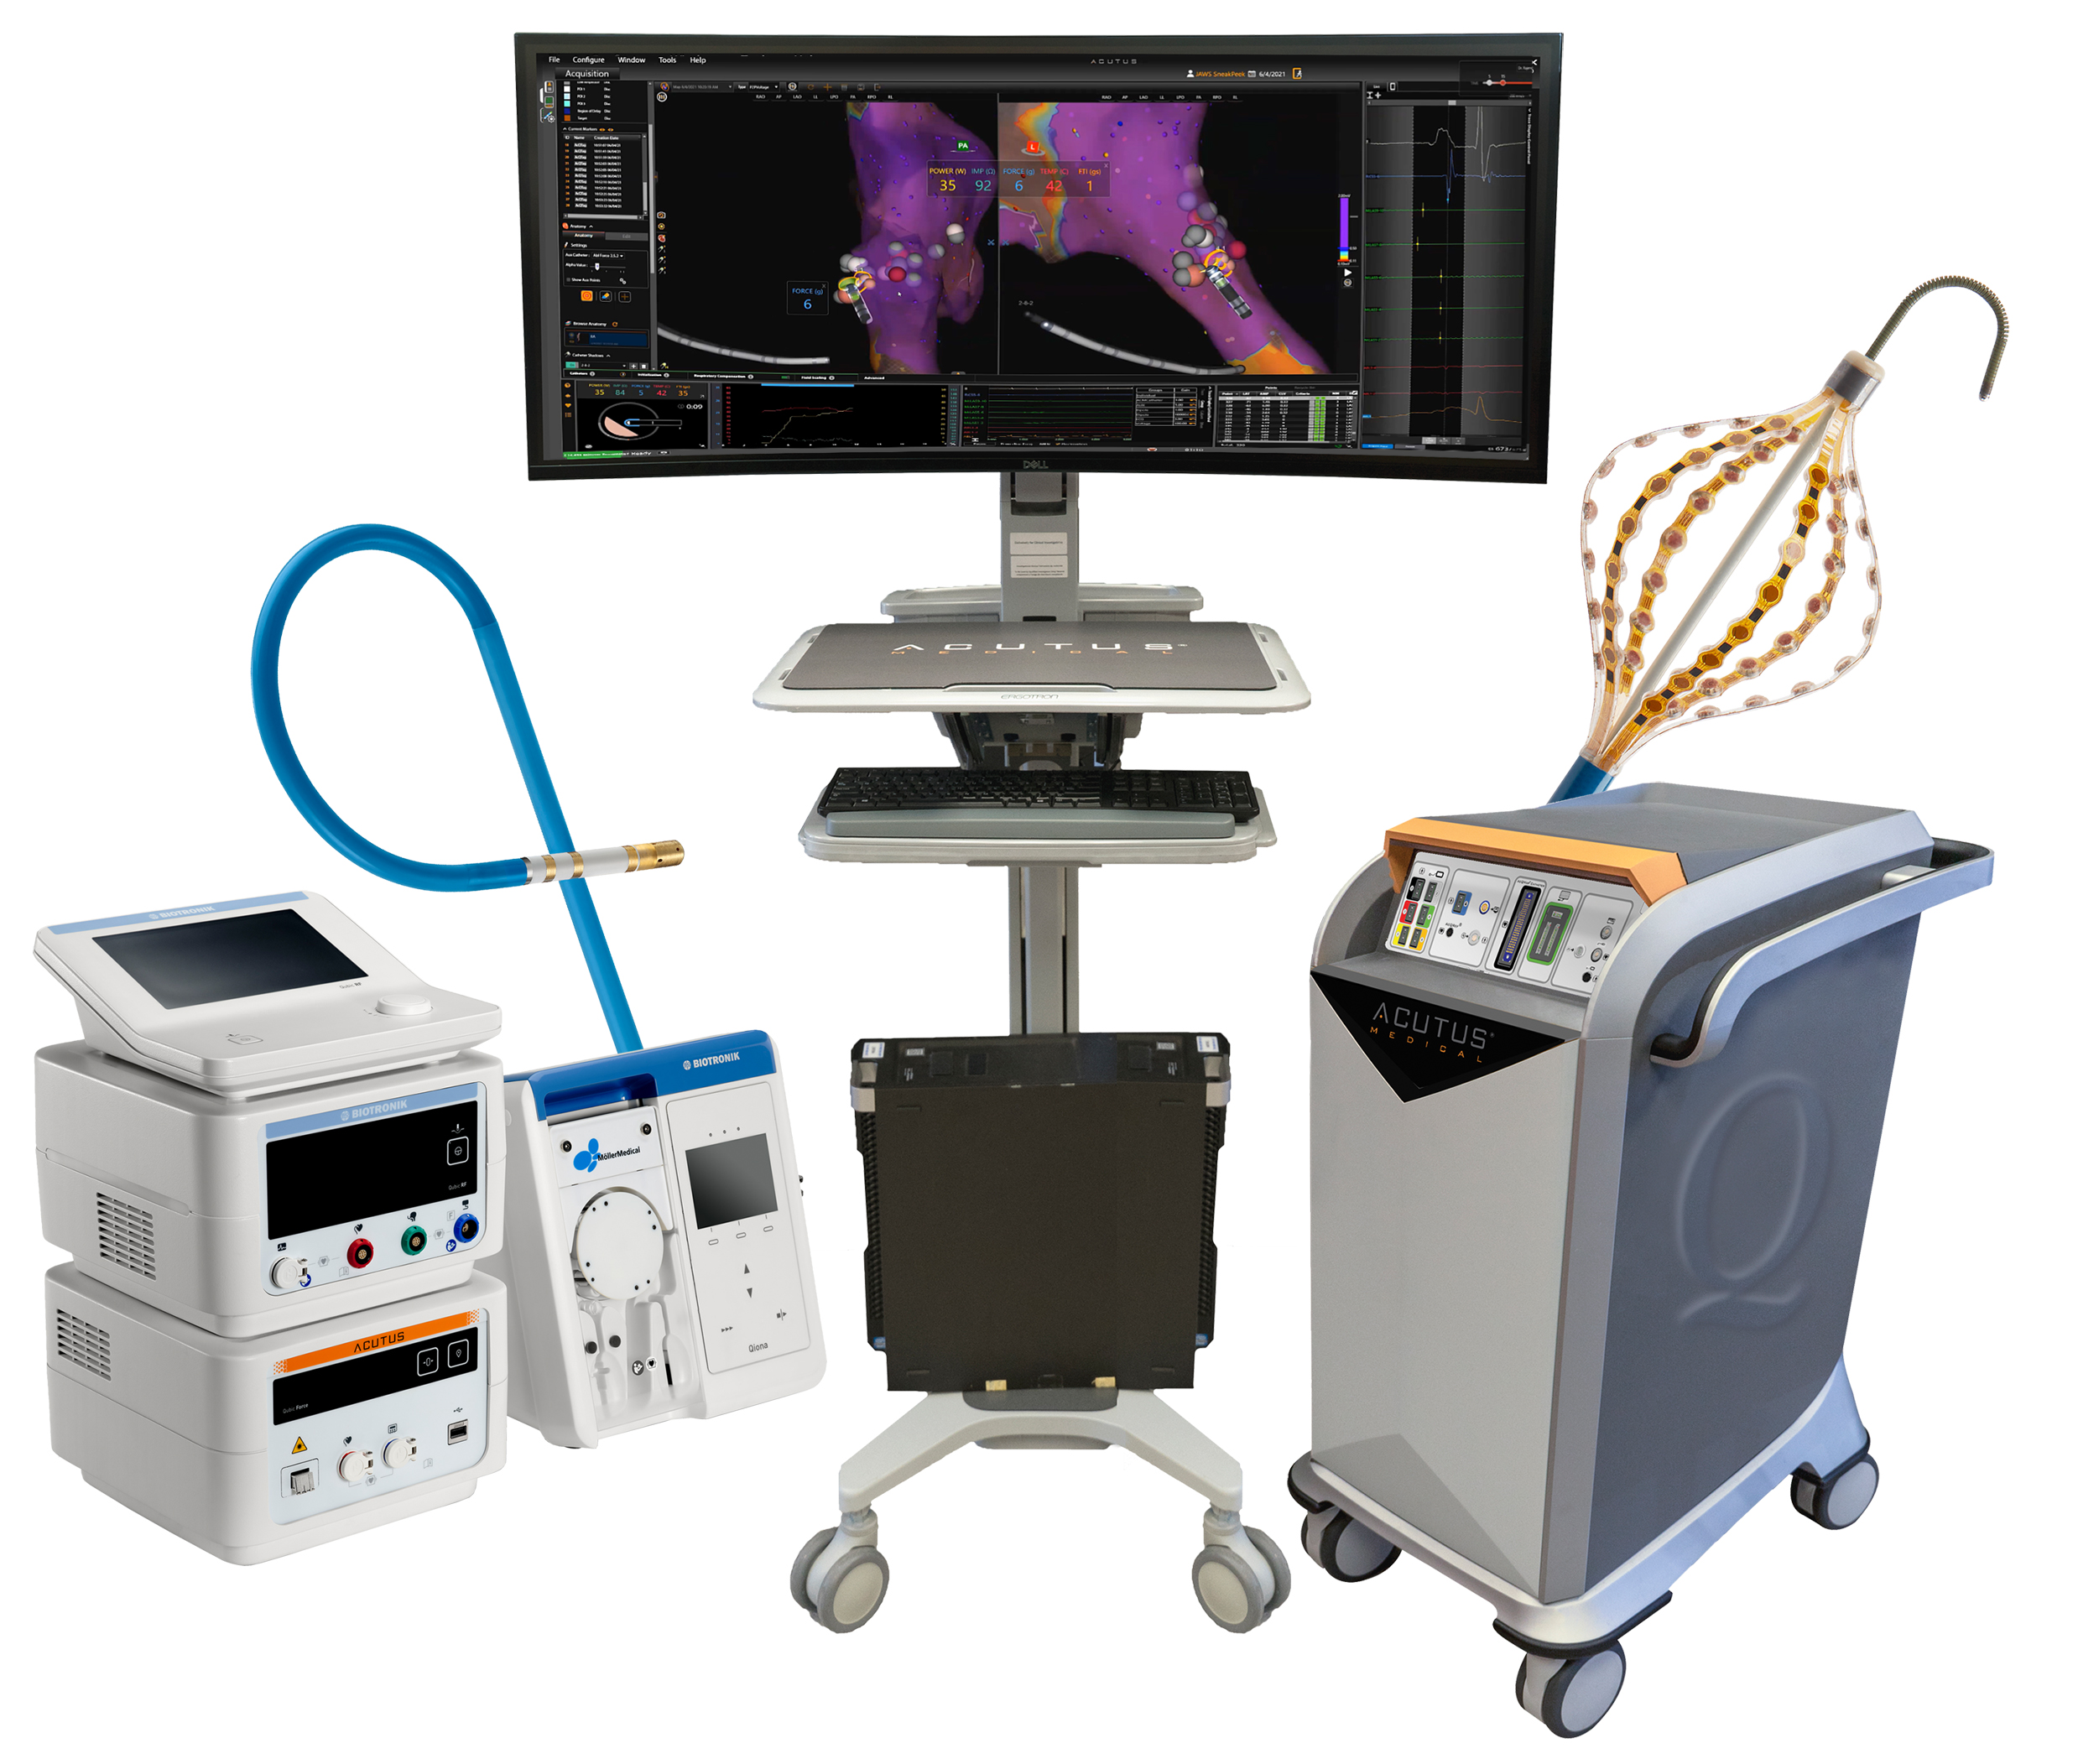 Acutus Medical’s Electrophysiology System